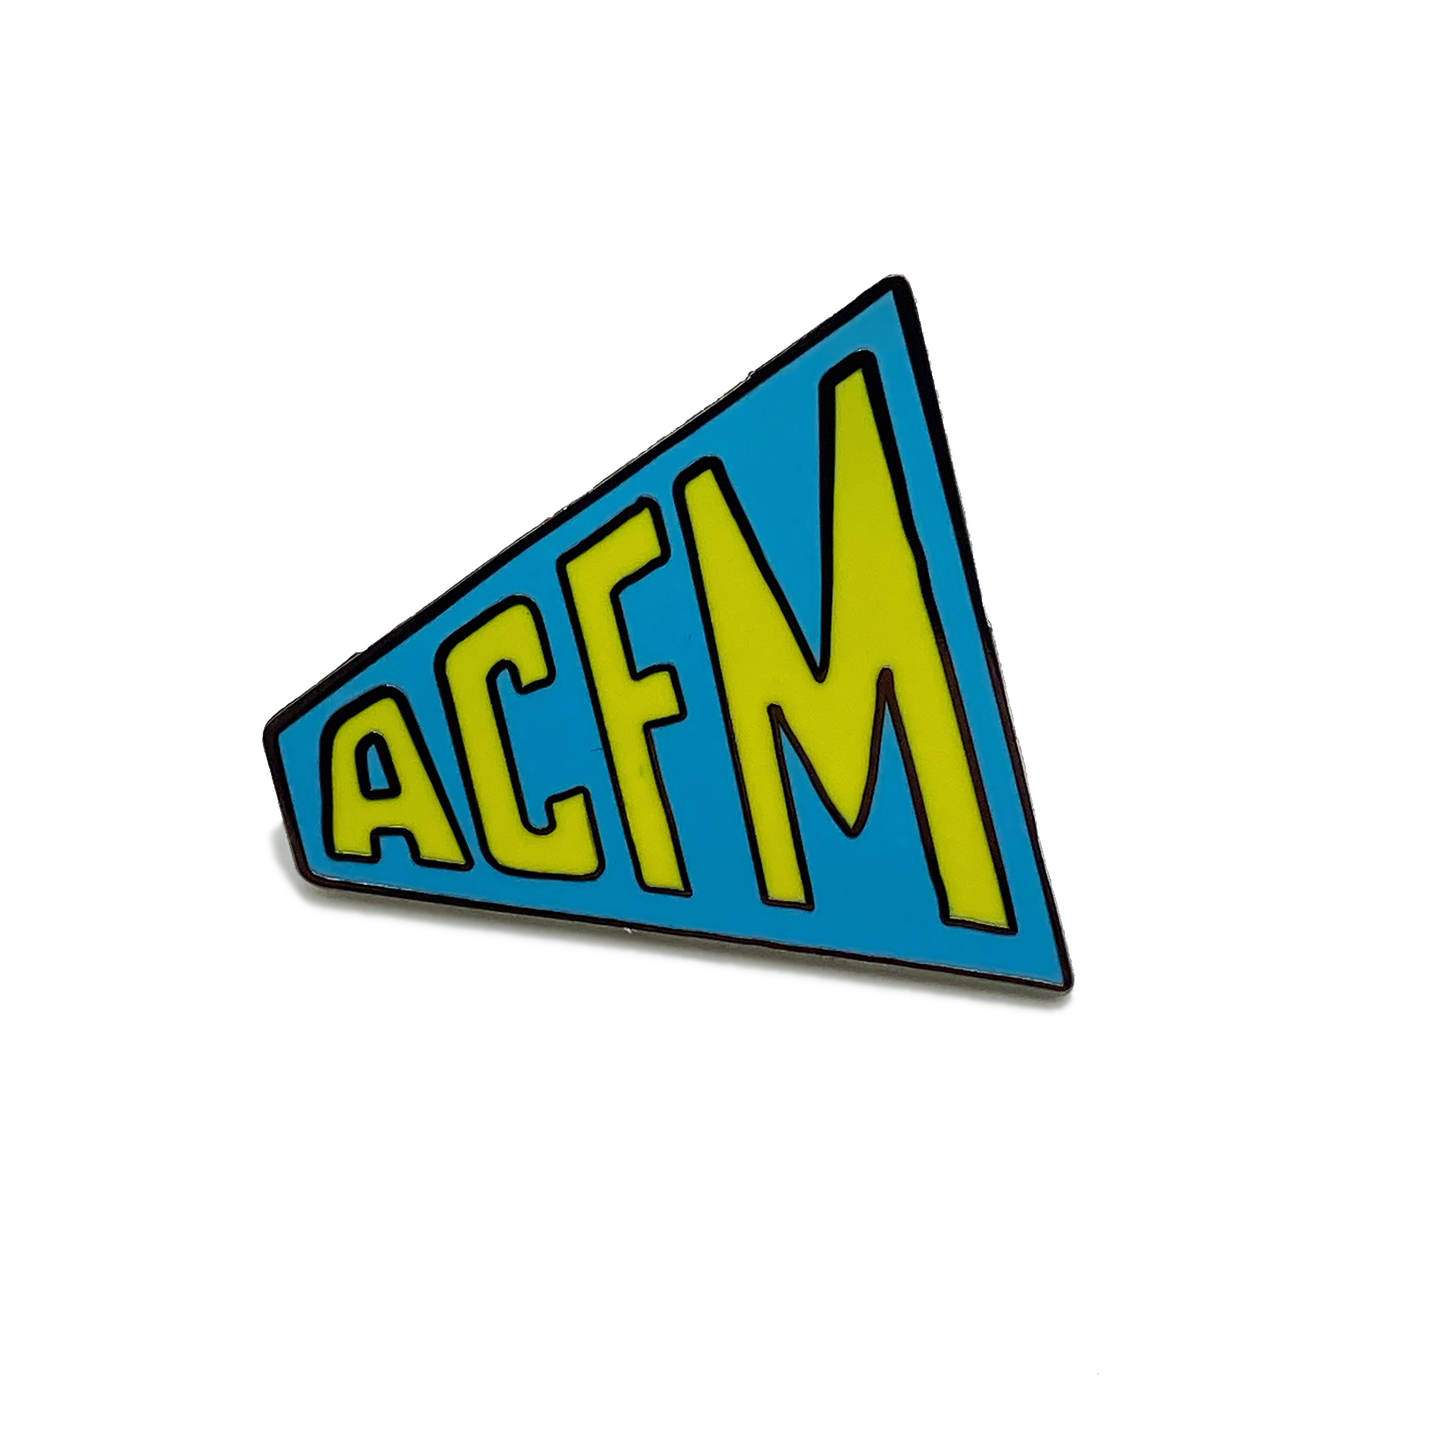 ACFM Enamel Pin